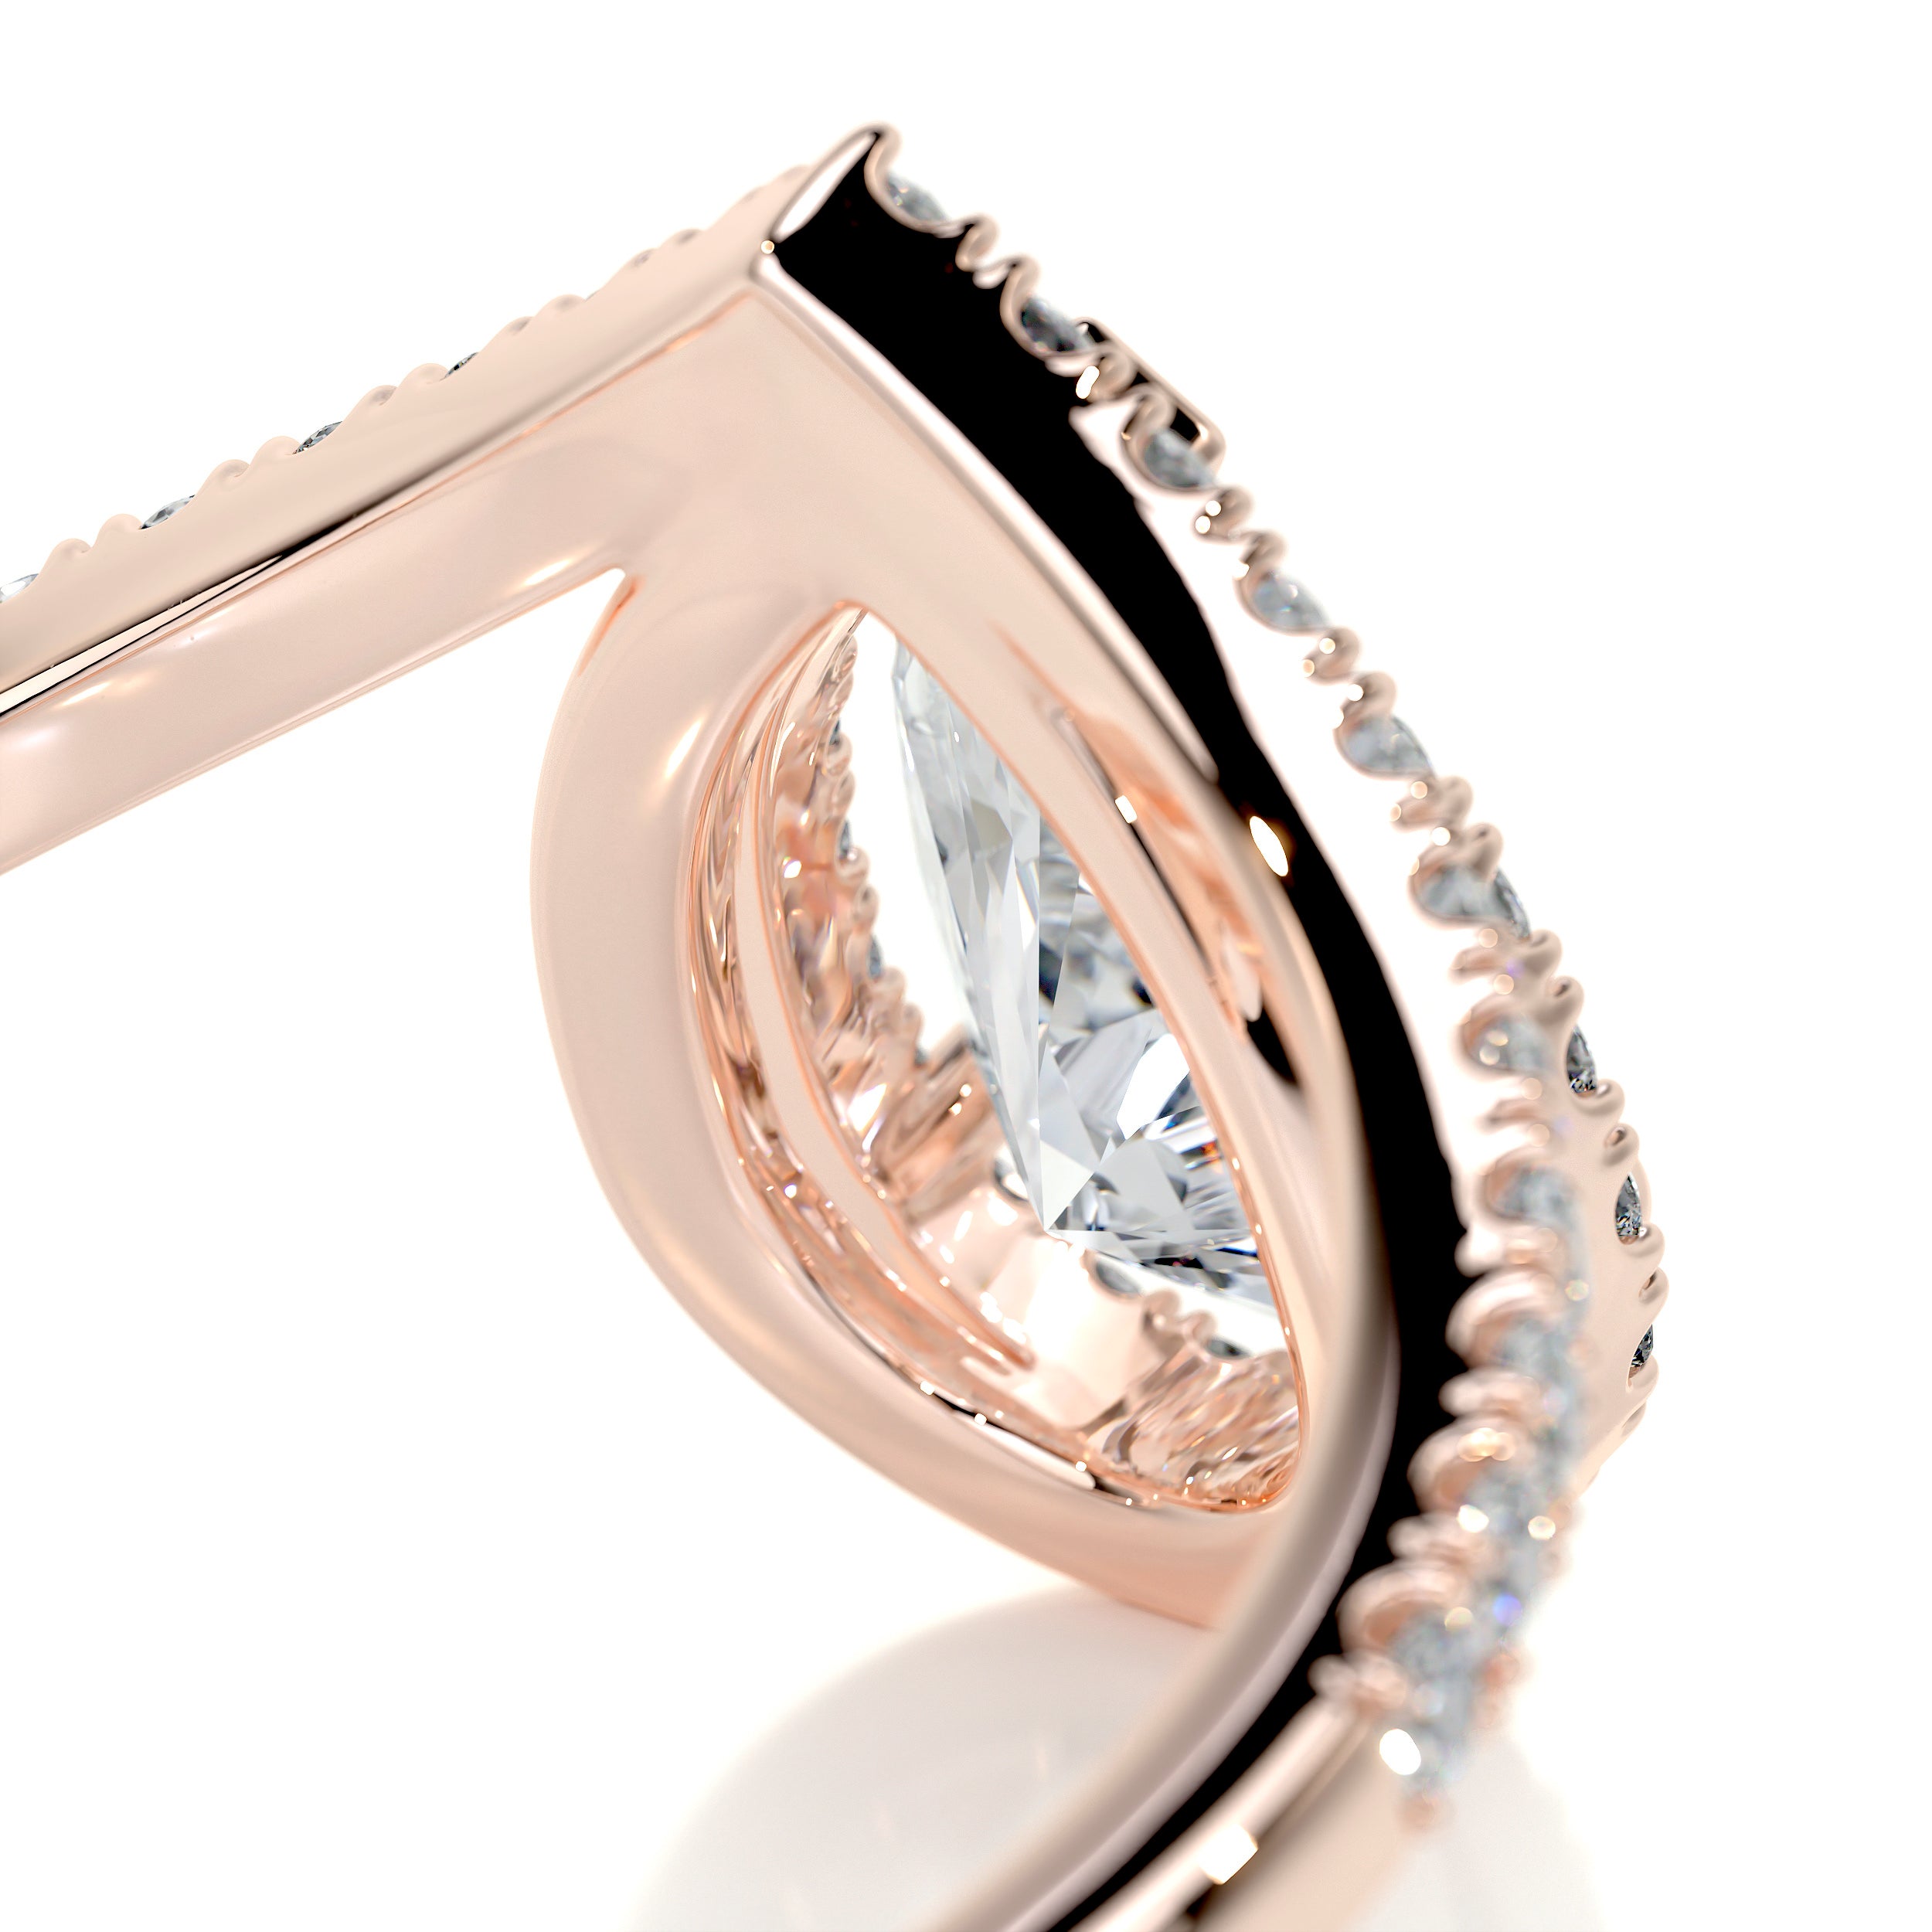 Miranda Diamond Engagement Ring -14K Rose Gold